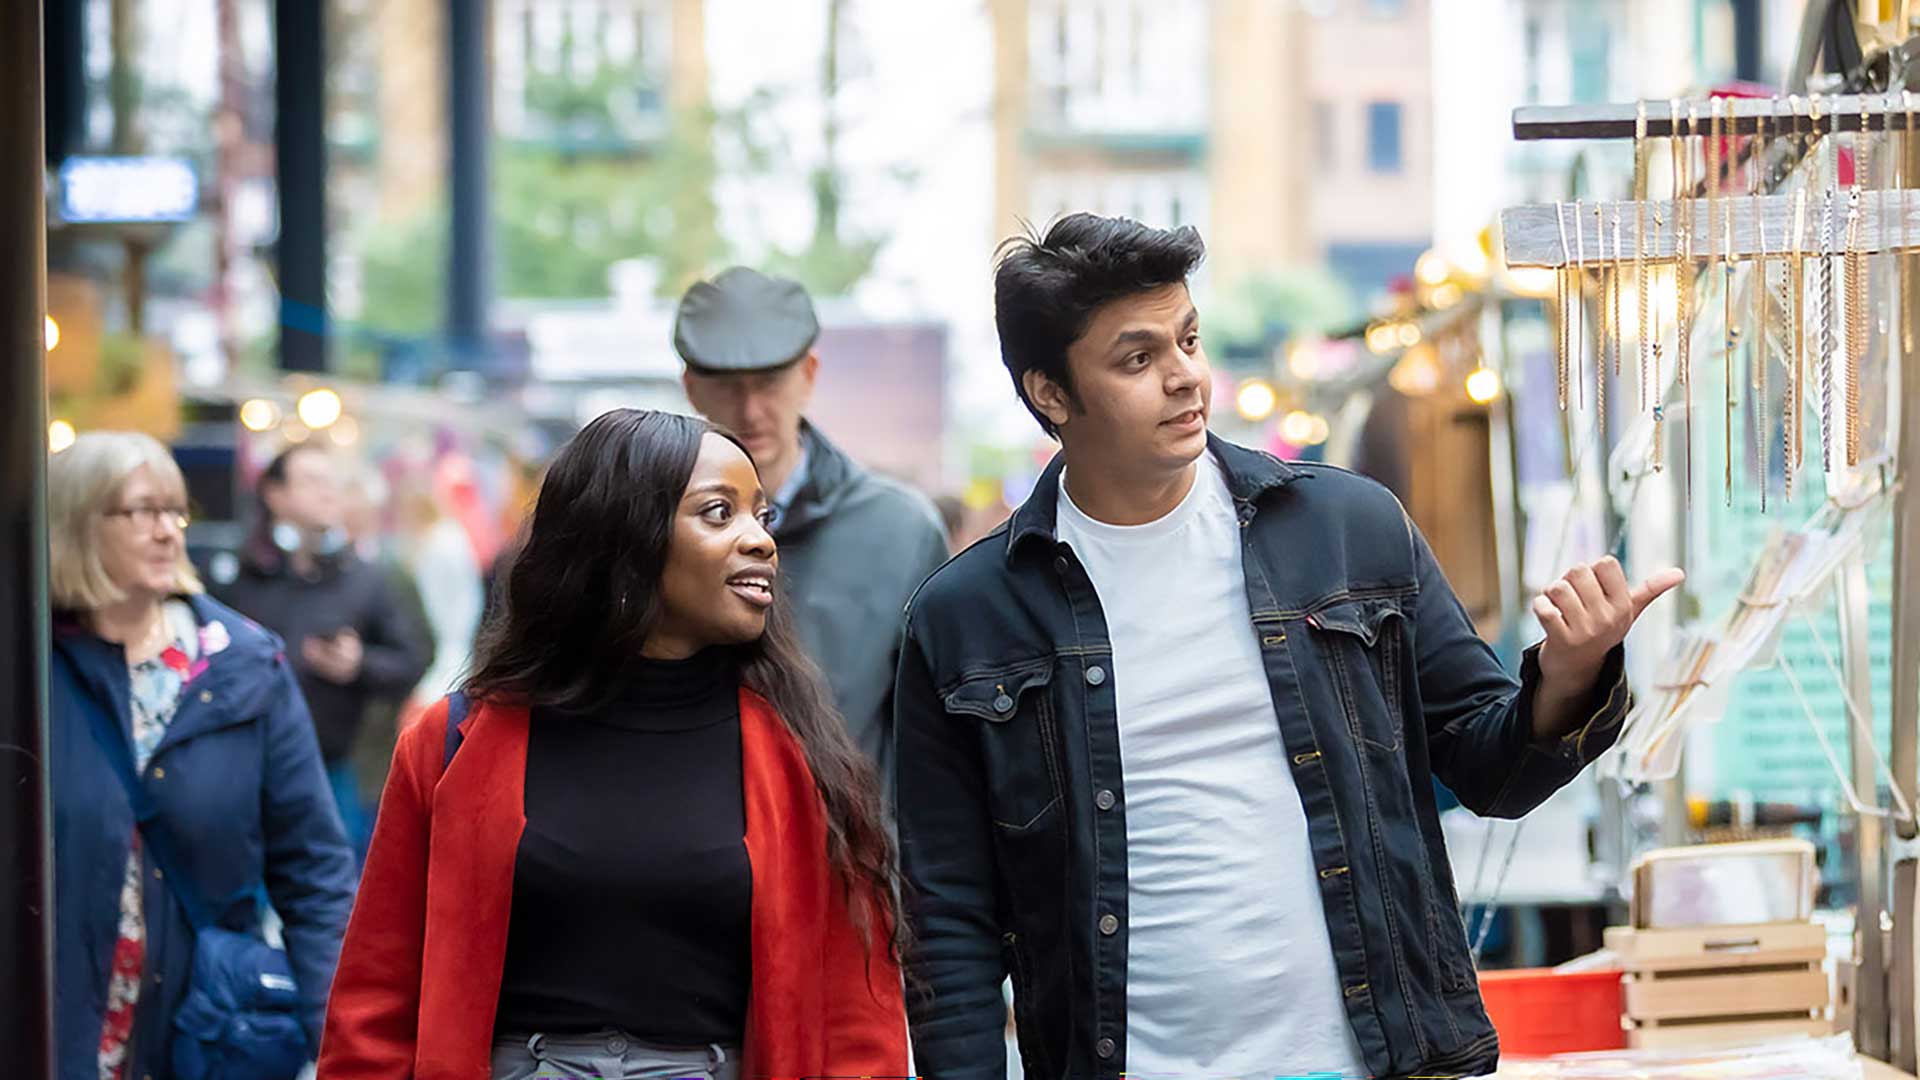 couple walking on London streets, through a market